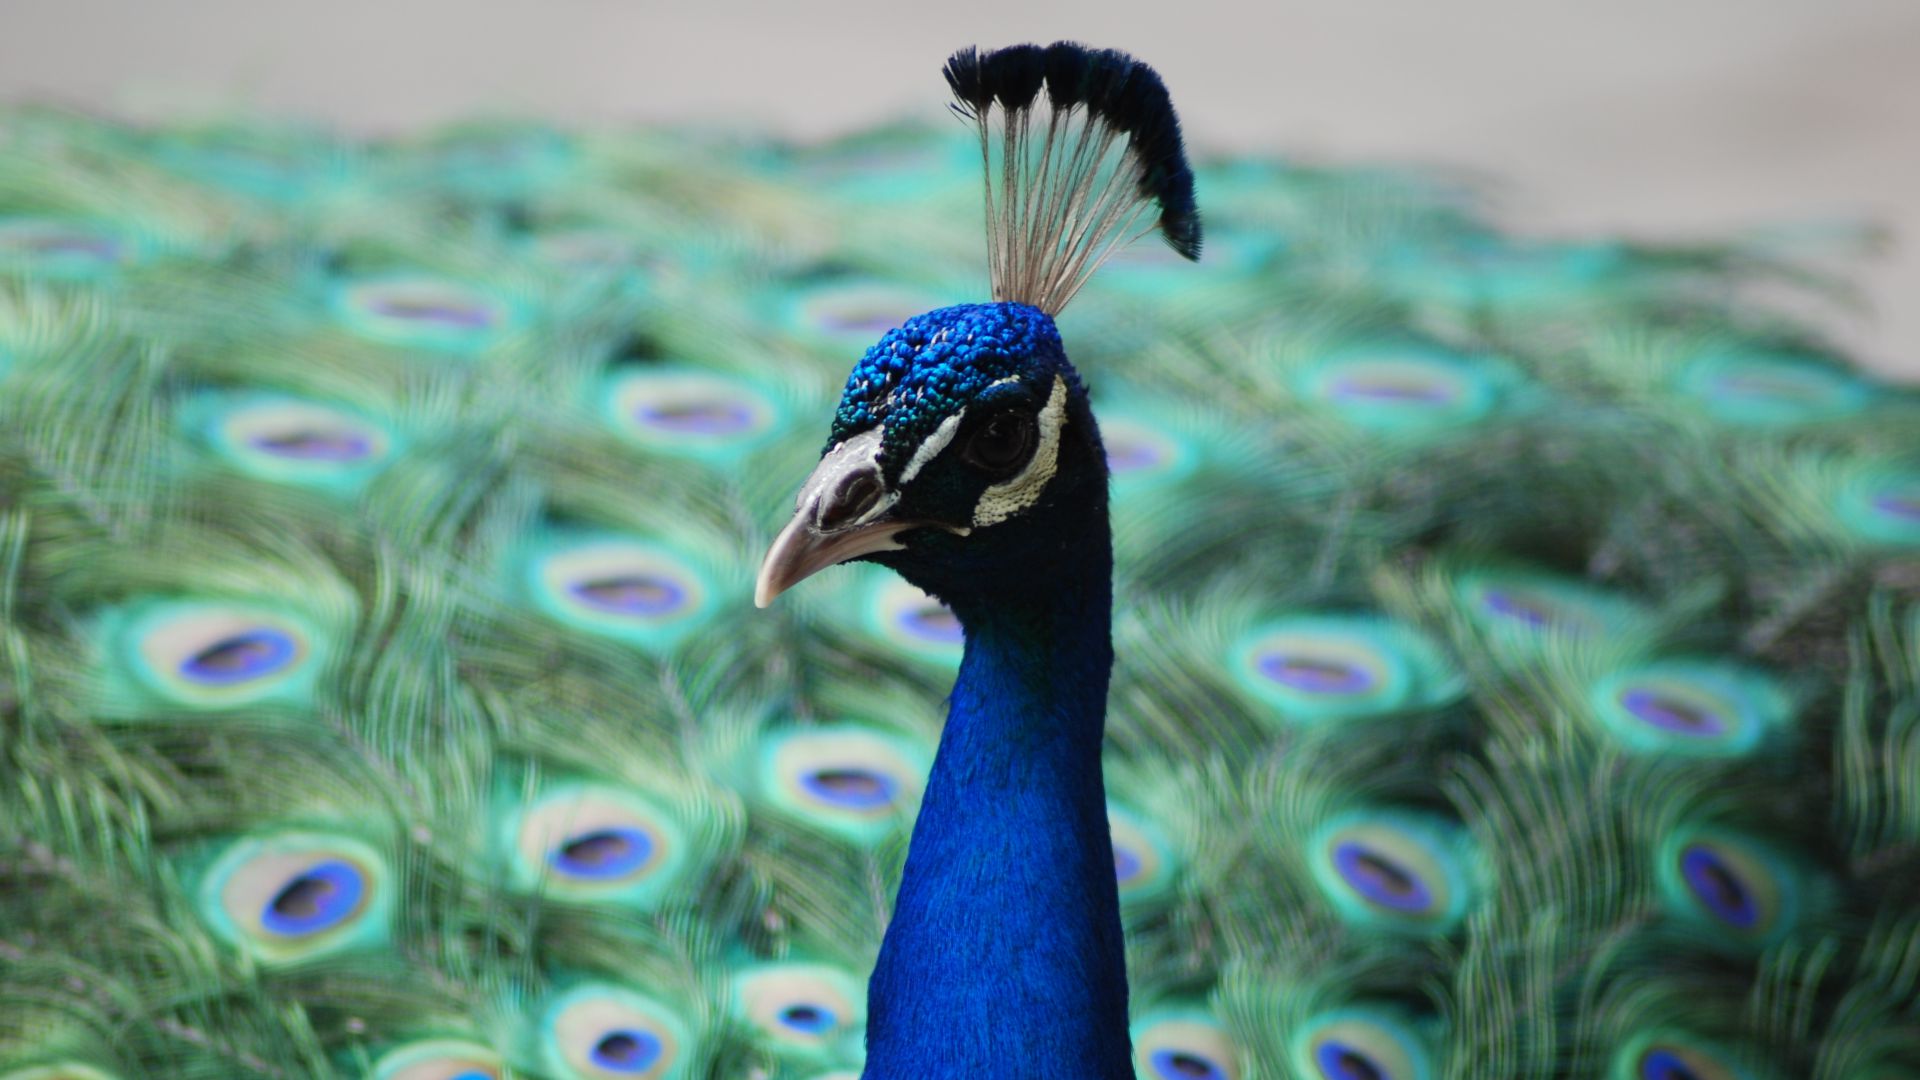 Павлин, перья, Peacock, feathers (horizontal)